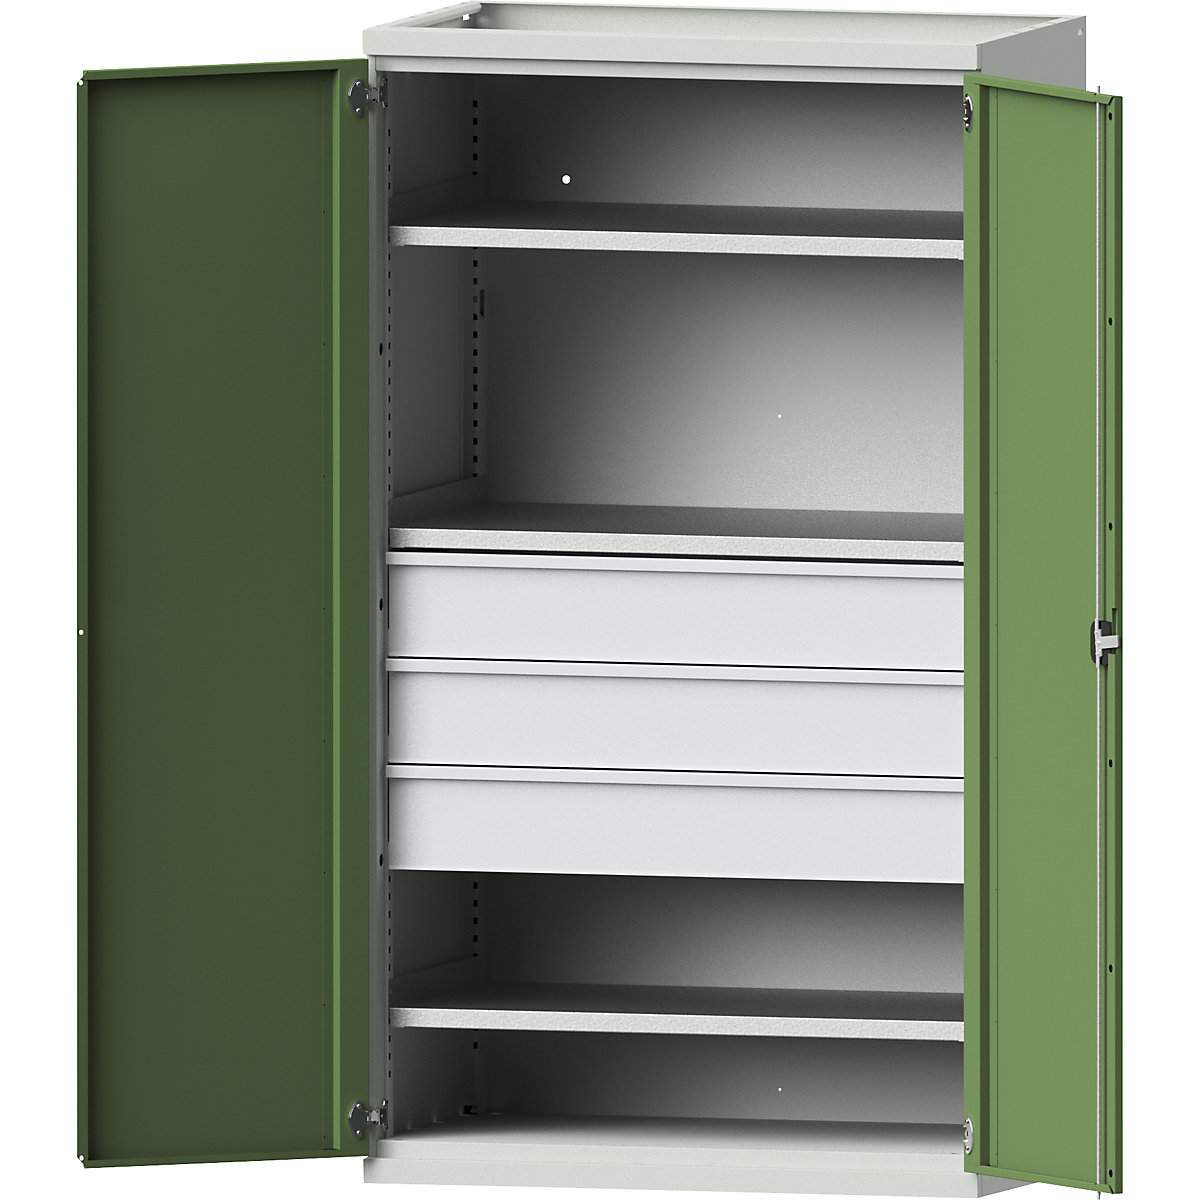 Heavy duty cupboard made of steel – eurokraft pro, 3 shelves, 3 x 180 mm high drawers, light grey / reseda green-3